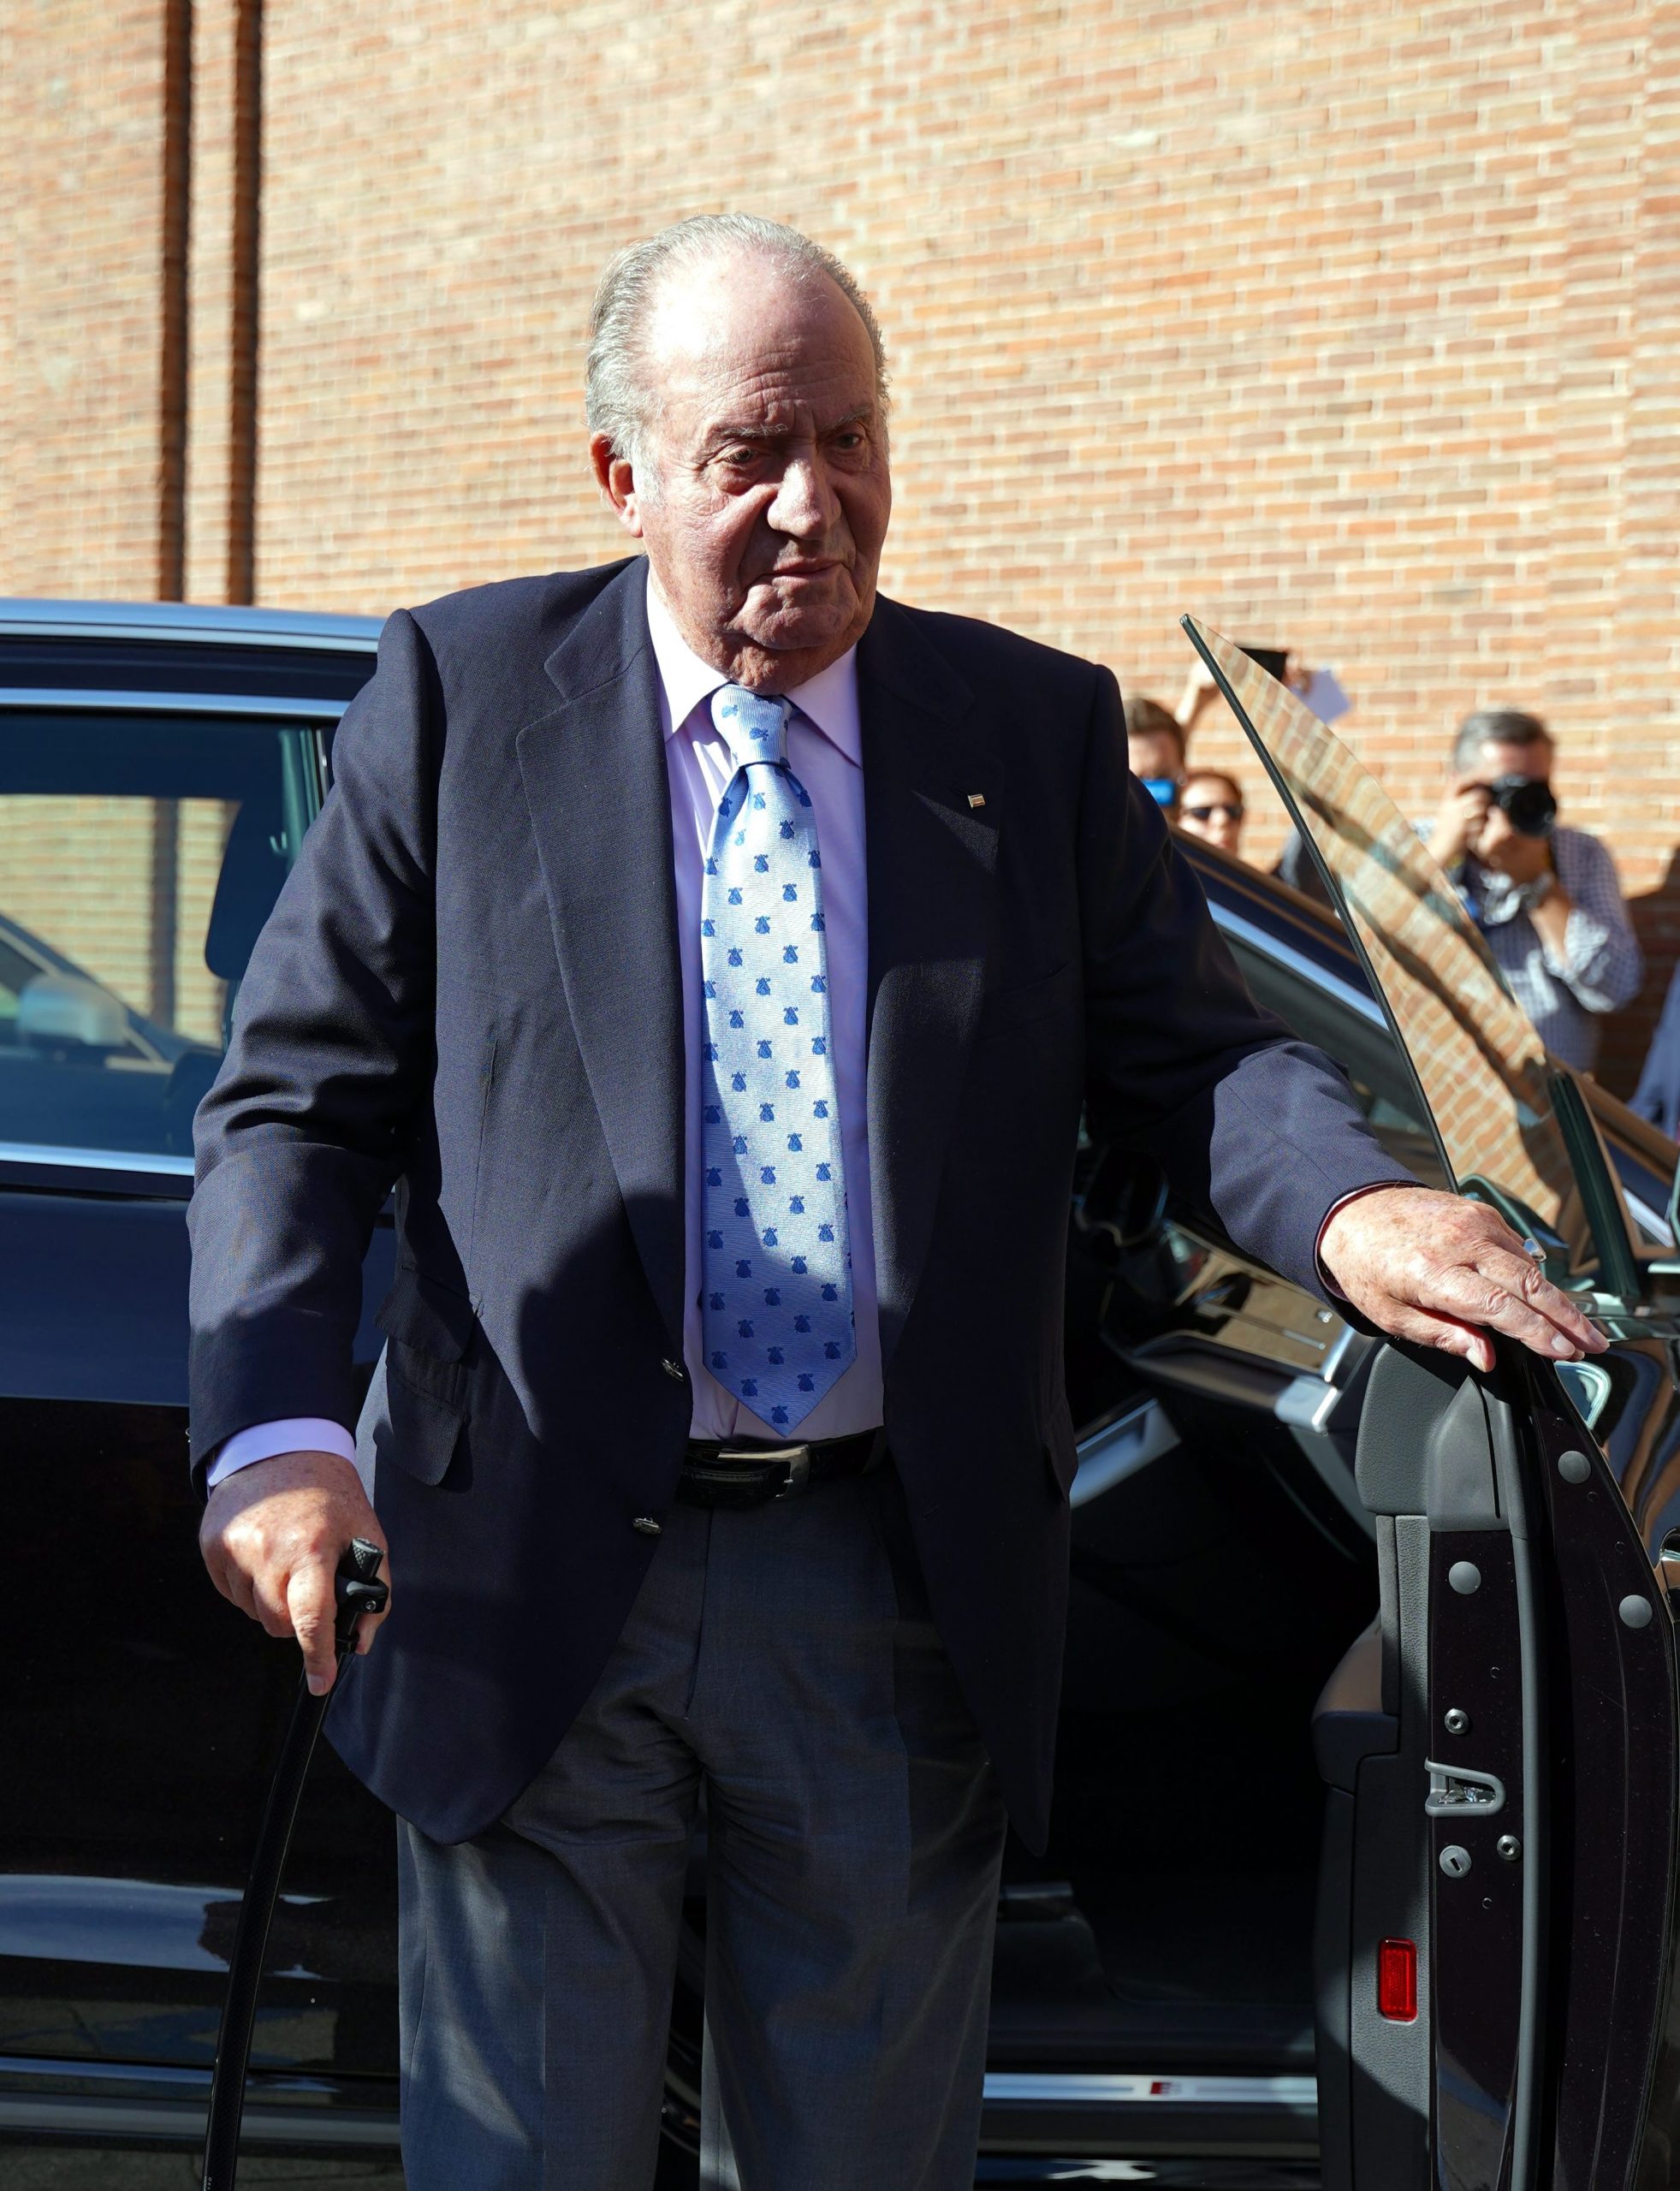 Spain's ex-king Juan Carlos win immunity ruling in London in civil case battle with former mistress